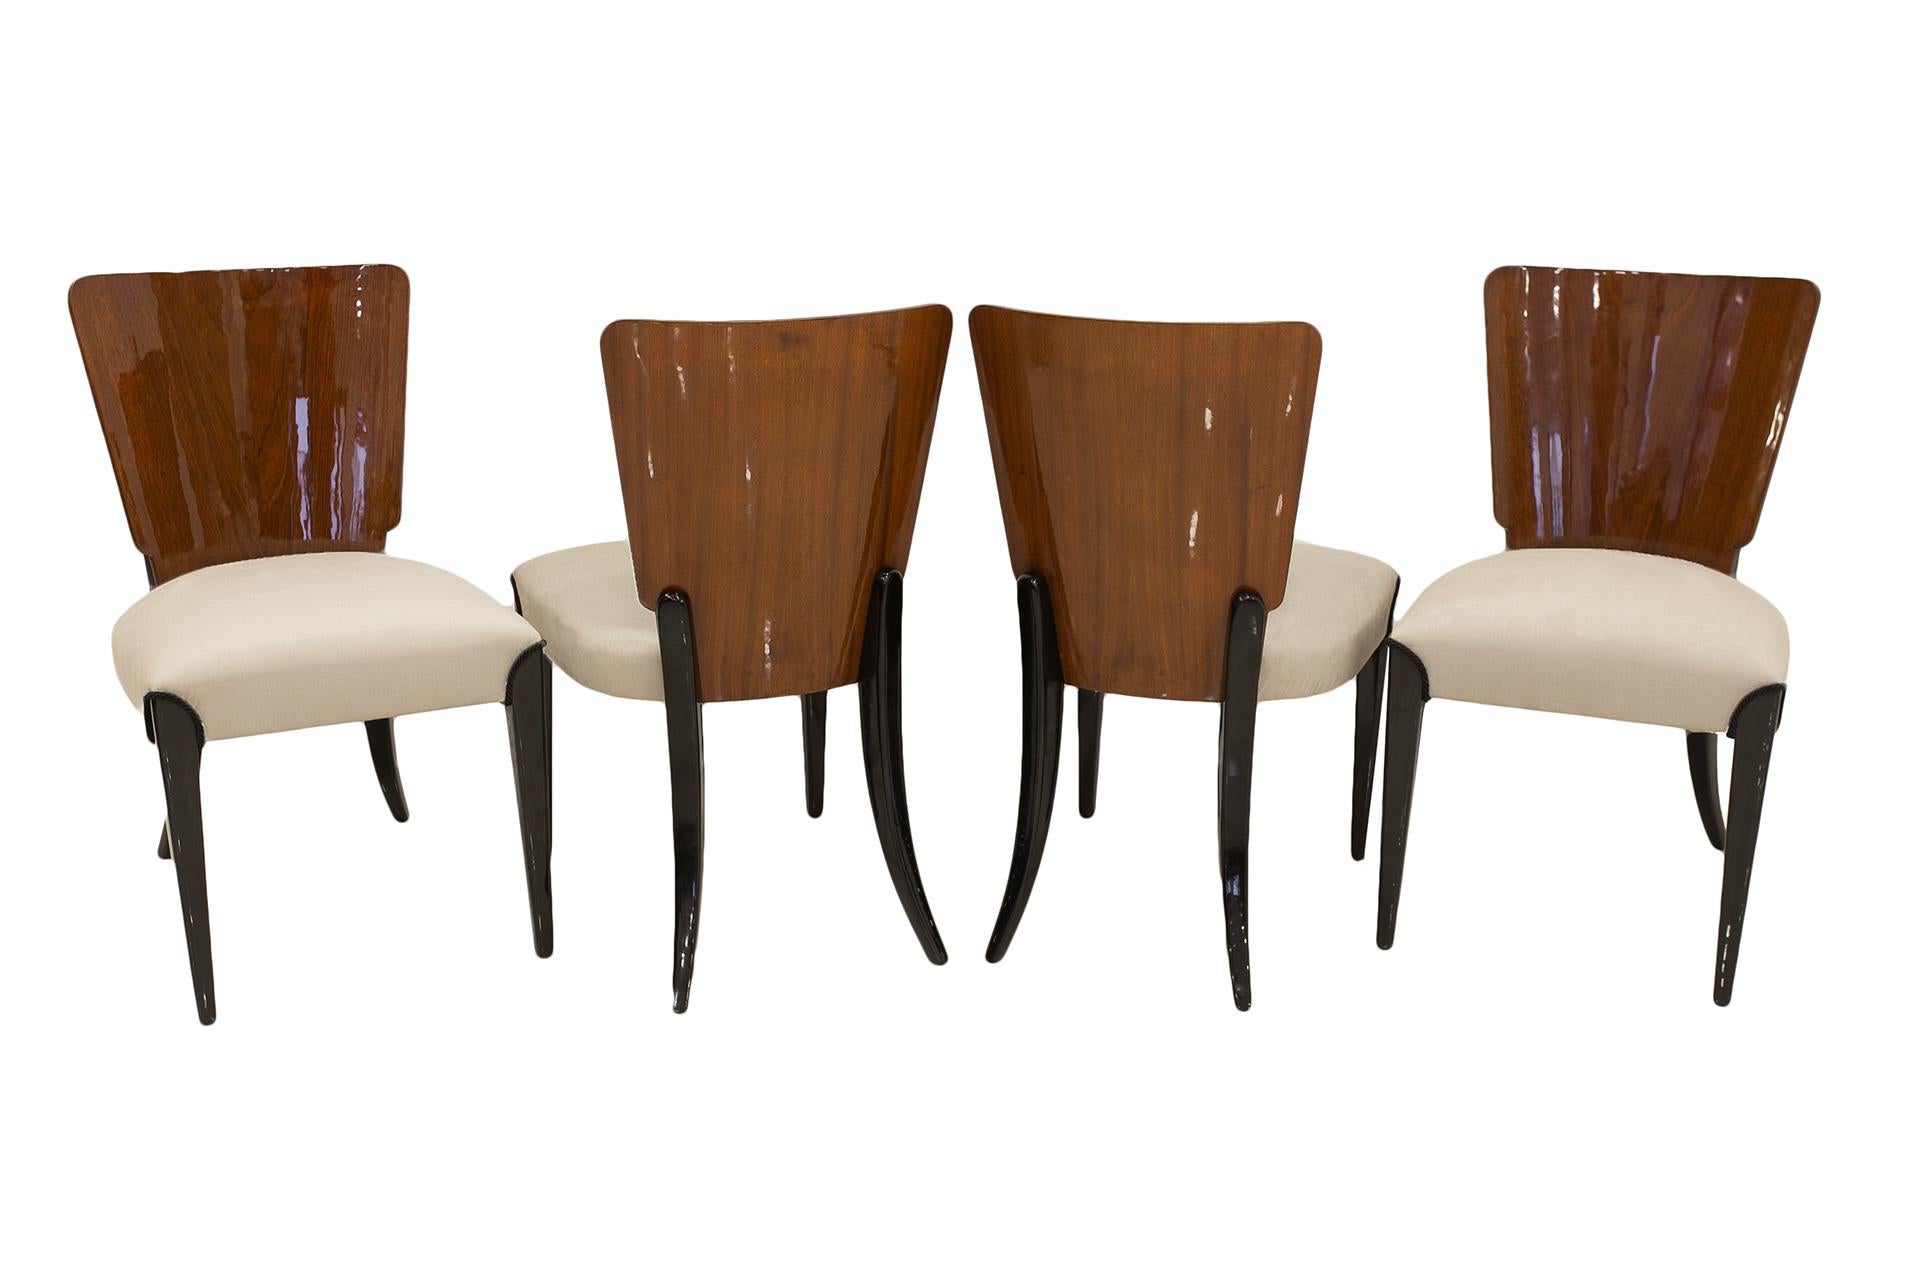 Mid-20th Century Set of 4 Chairs by J. Halabala, Czechoslovakia, 1930s